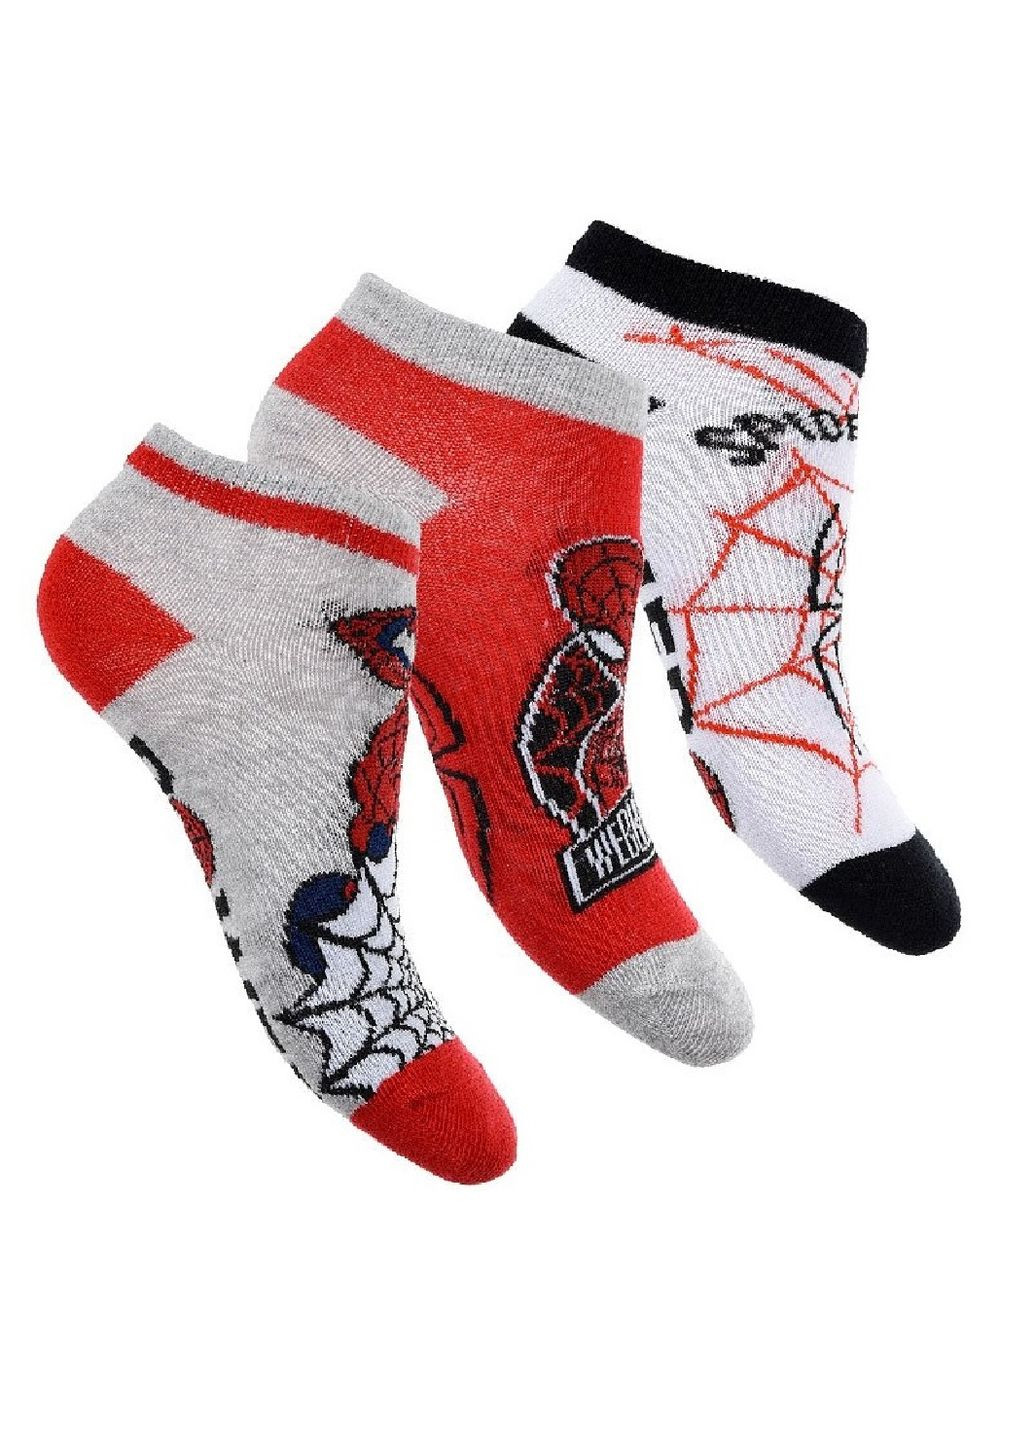 Носки 3 пары Spider Man (Человек Паук) UE06152 Disney шкарпетки 3шт. (292142640)